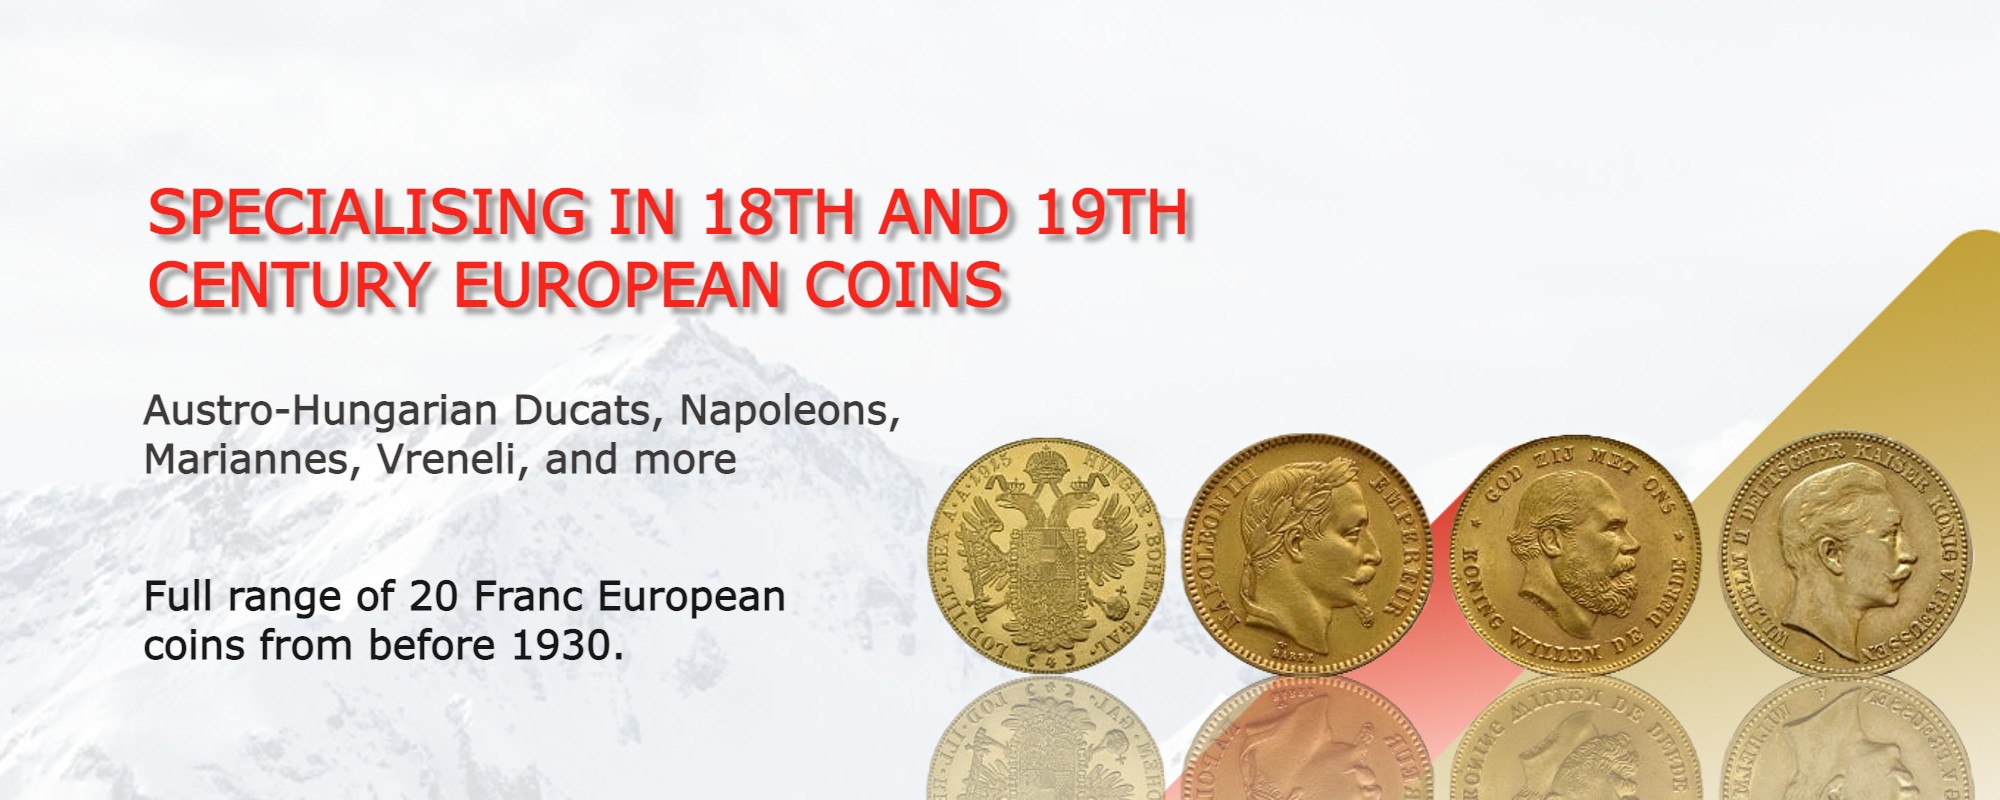 specialising-in-european-coins.jpg